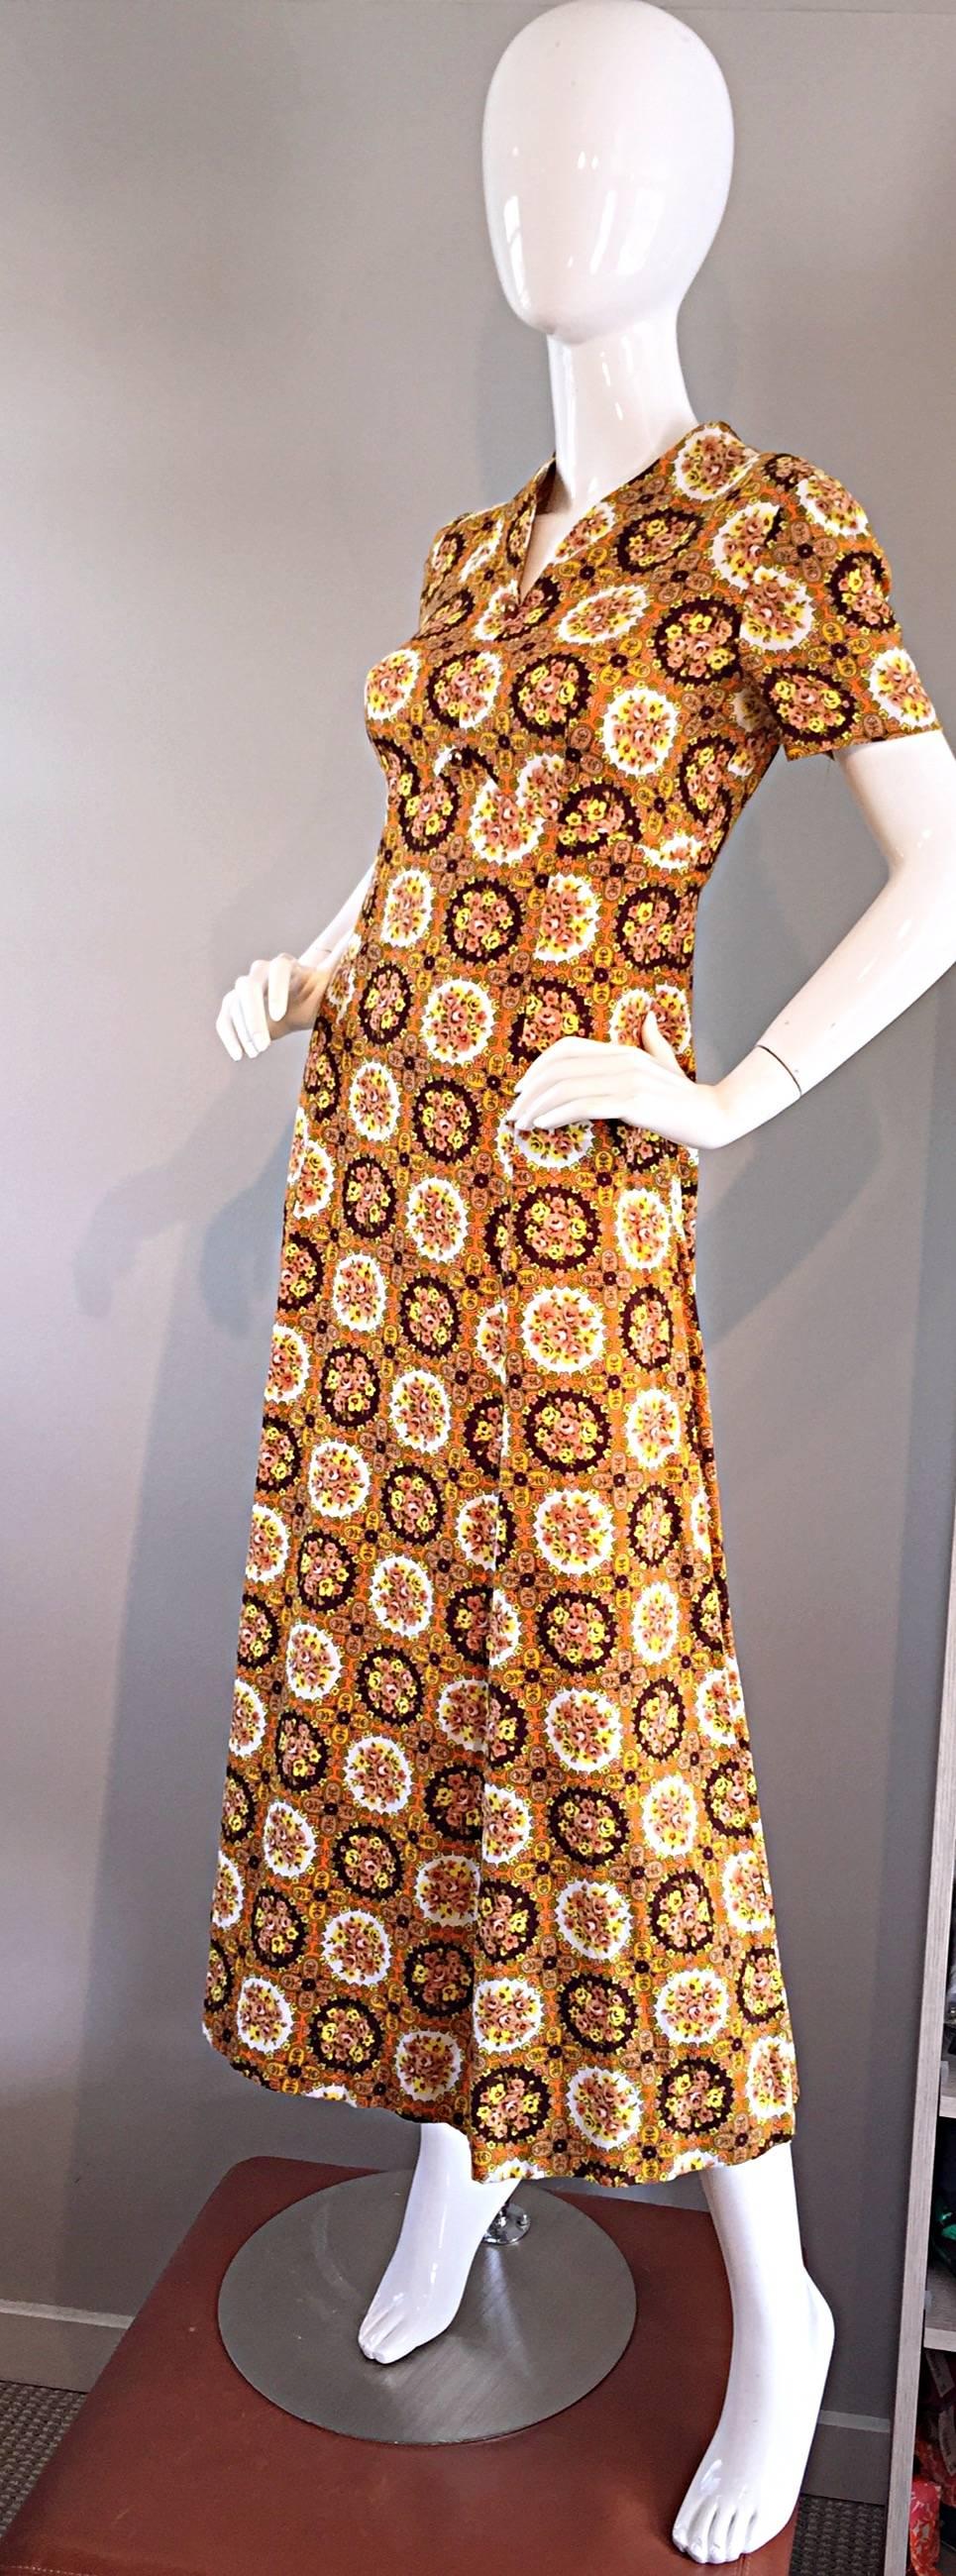 Women's Vintage Joseph Magnin 1970s Boho Cotton Flower 70s Bohemian Ethnic Midi Dress